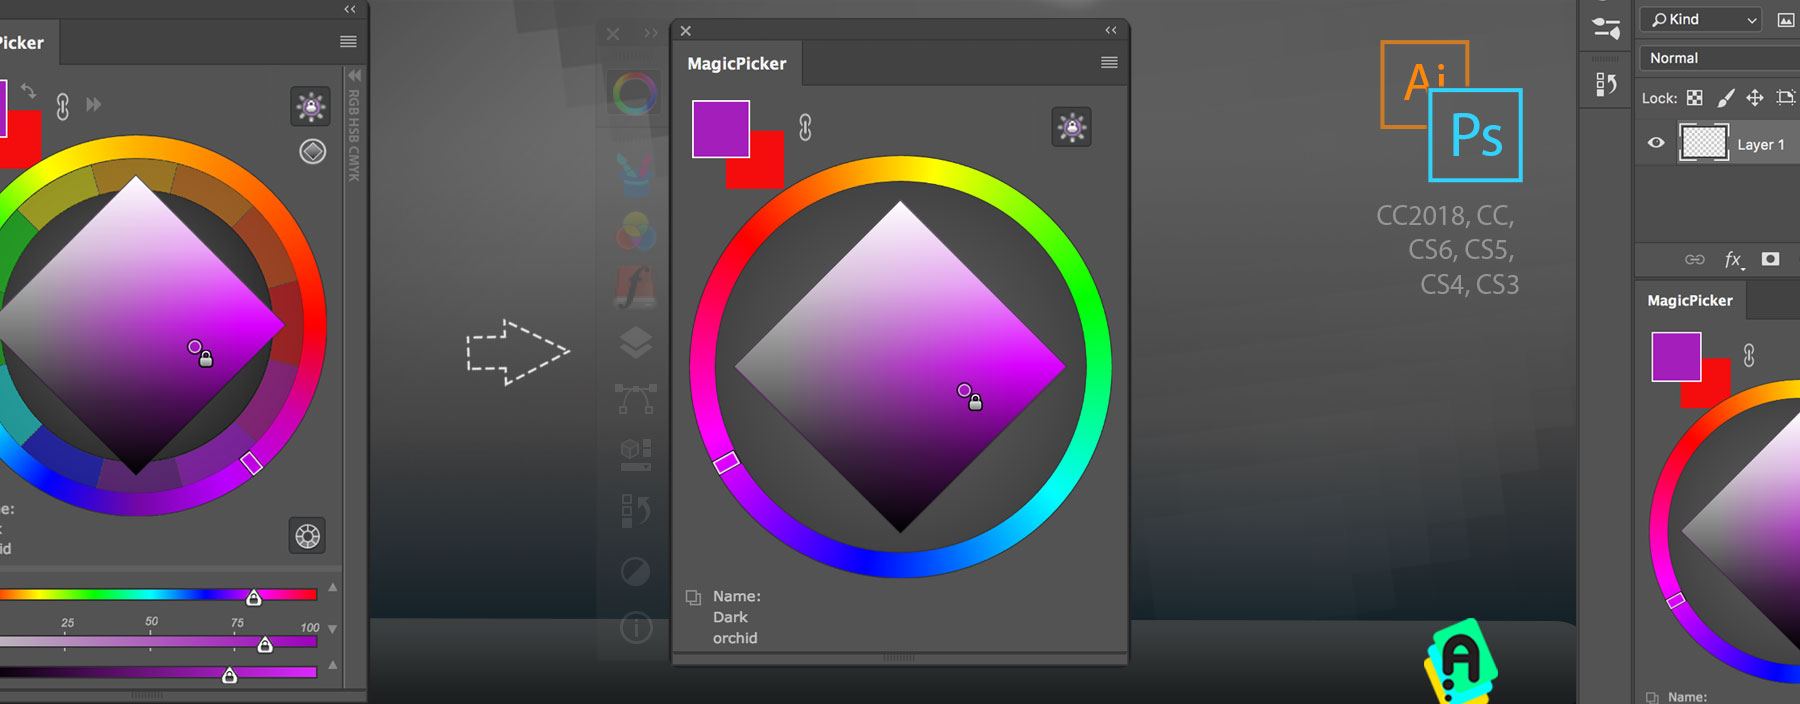 MagicPicker 6 - uncluttered UI in PRO Mode